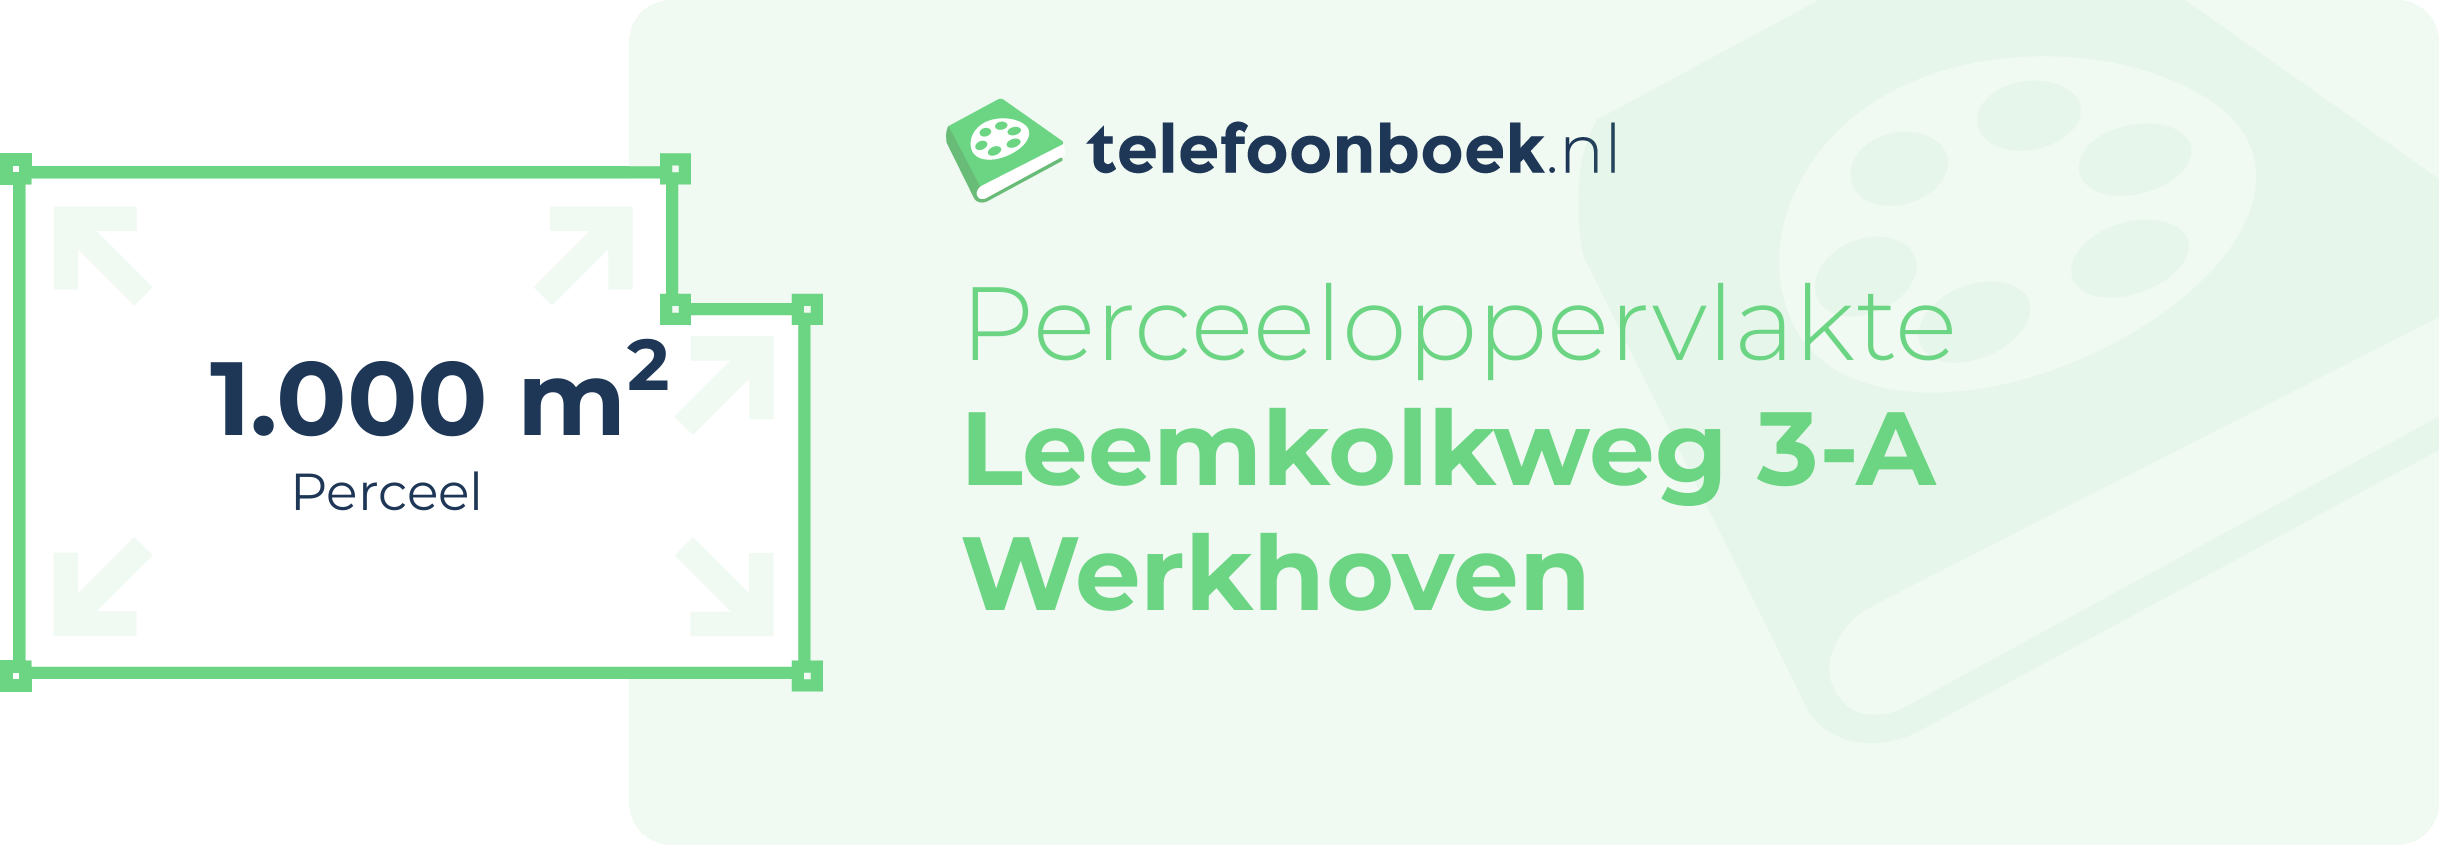 Perceeloppervlakte Leemkolkweg 3-A Werkhoven